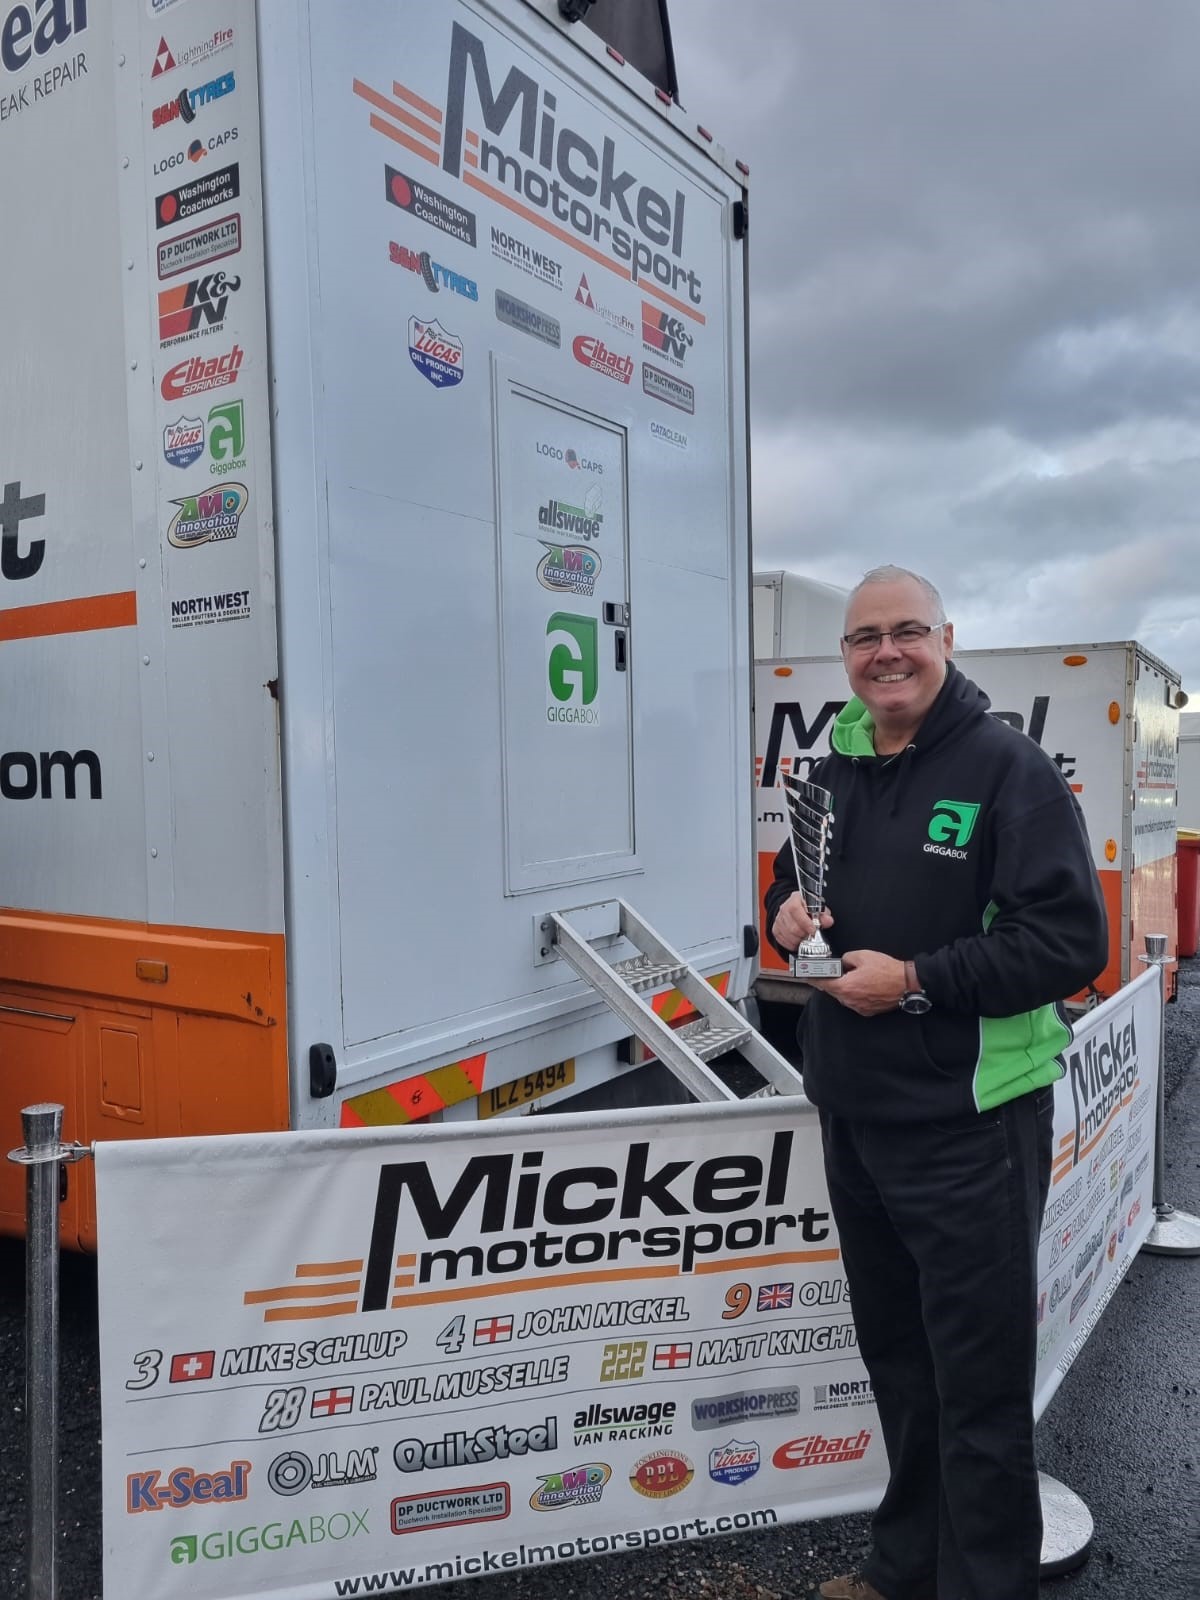 Podiums a plenty for Mickel Motorsport at Knockhill, Scotland Gallery Image 4